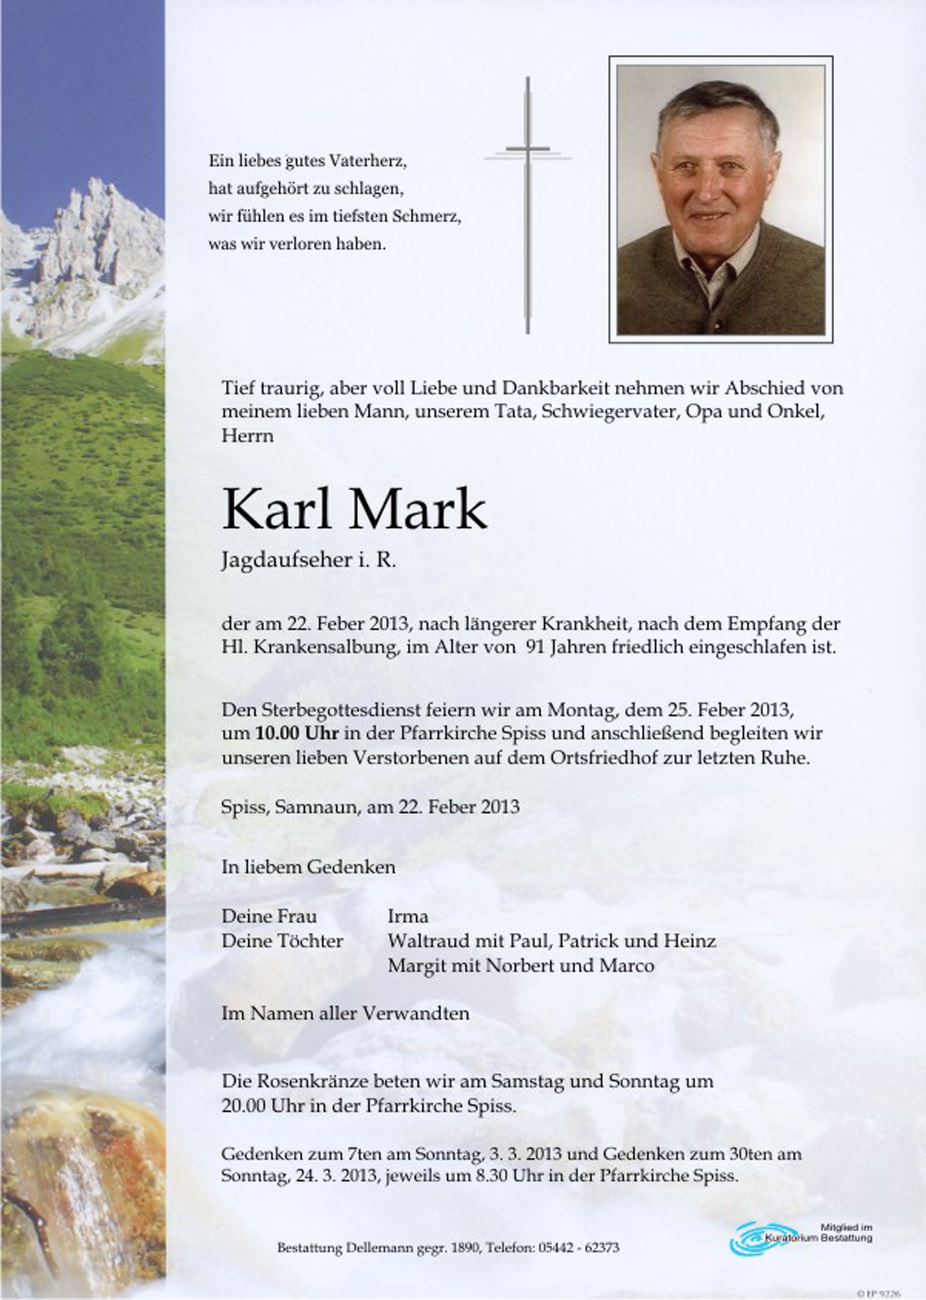   Karl Mark